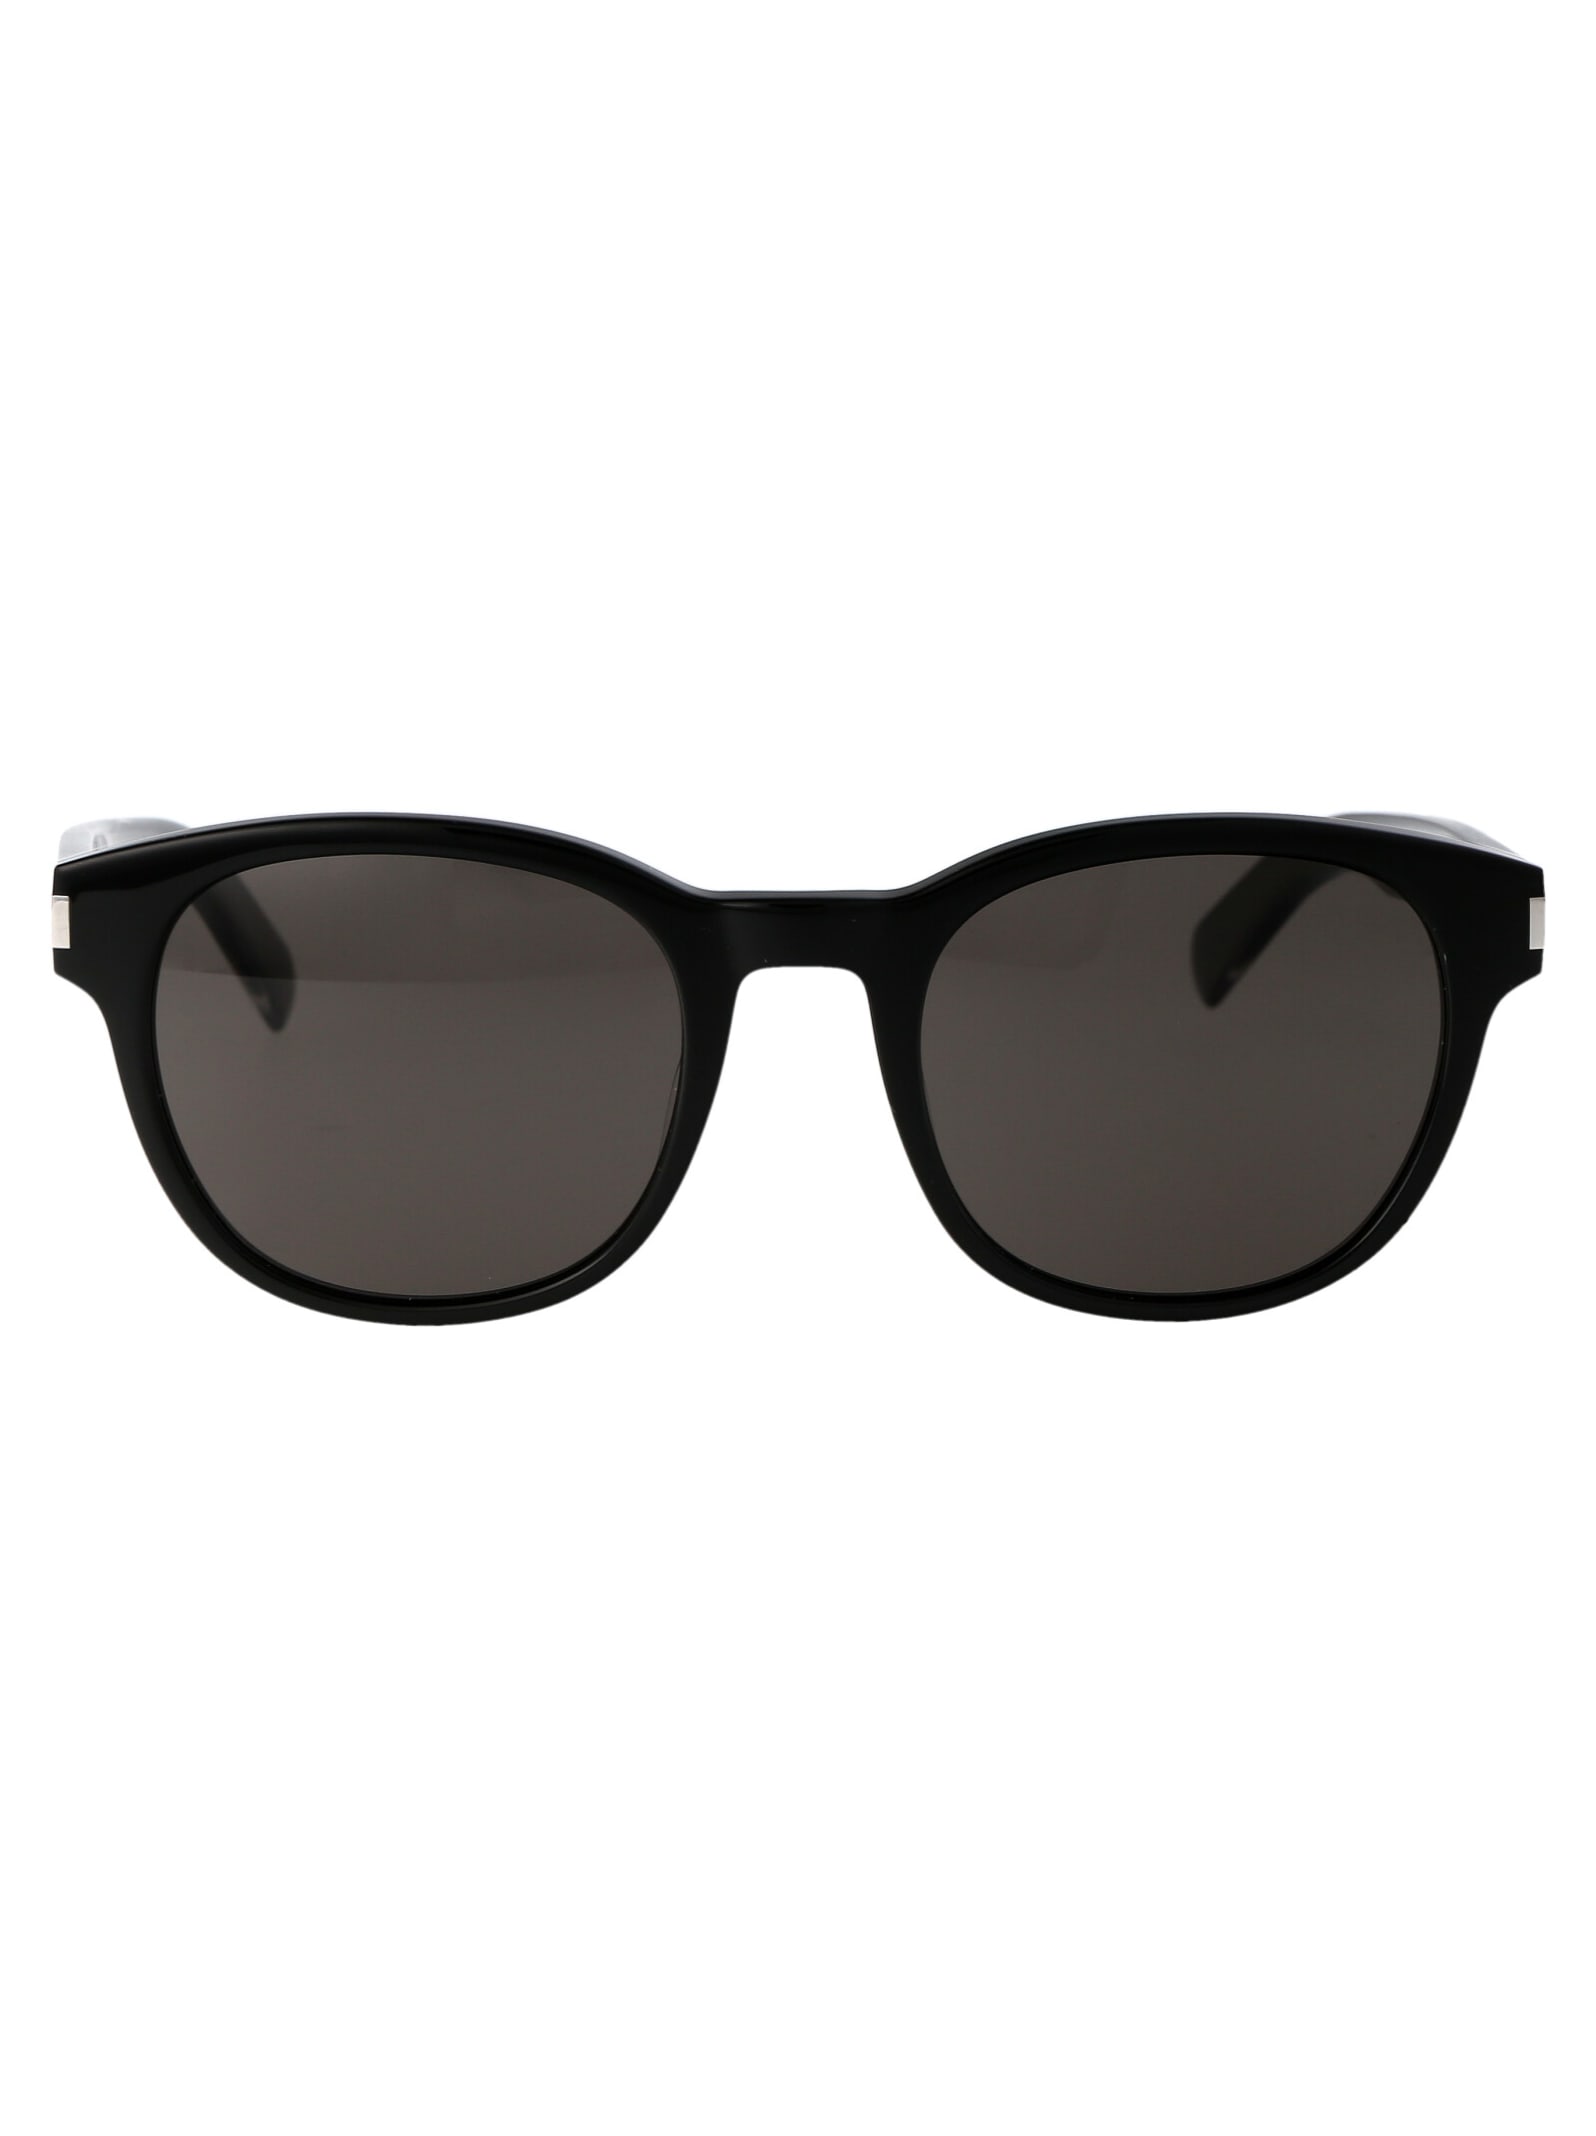 Saint Laurent Sl 620 Sunglasses In 001 Black Crystal Black